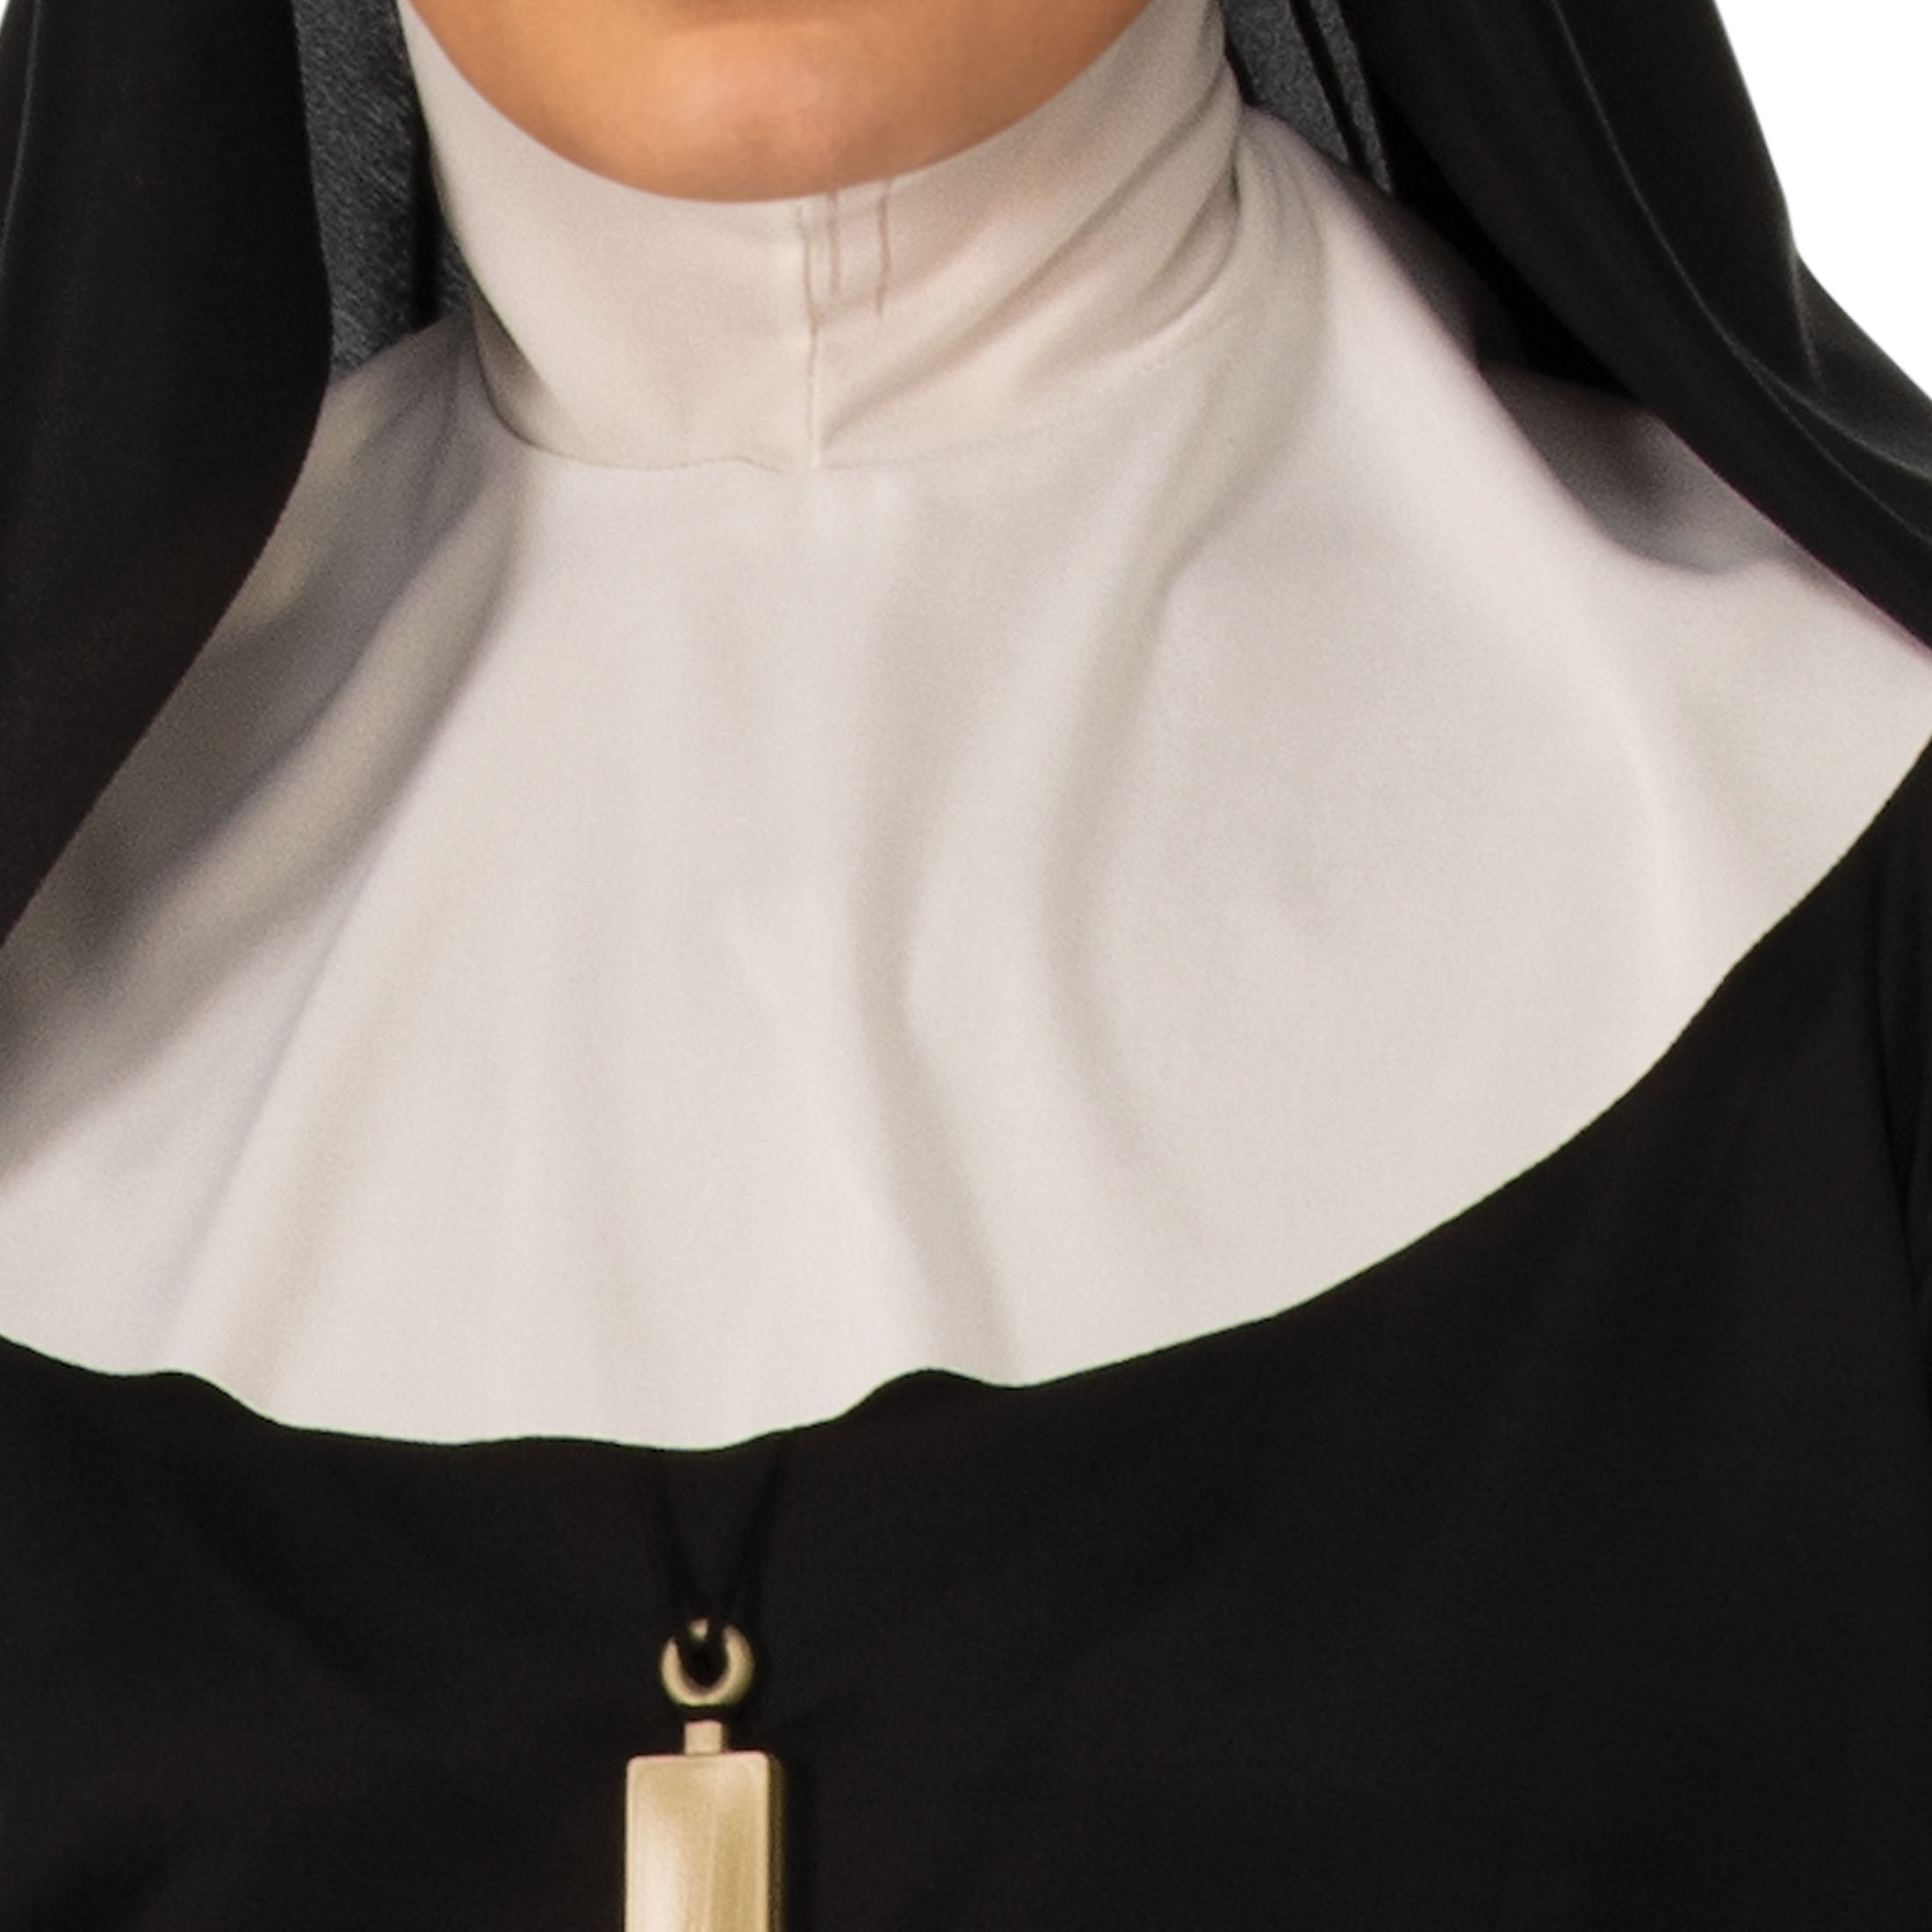 Nun Adult Women's Halloween Costume XXL By Rubies II - image 5 of 7